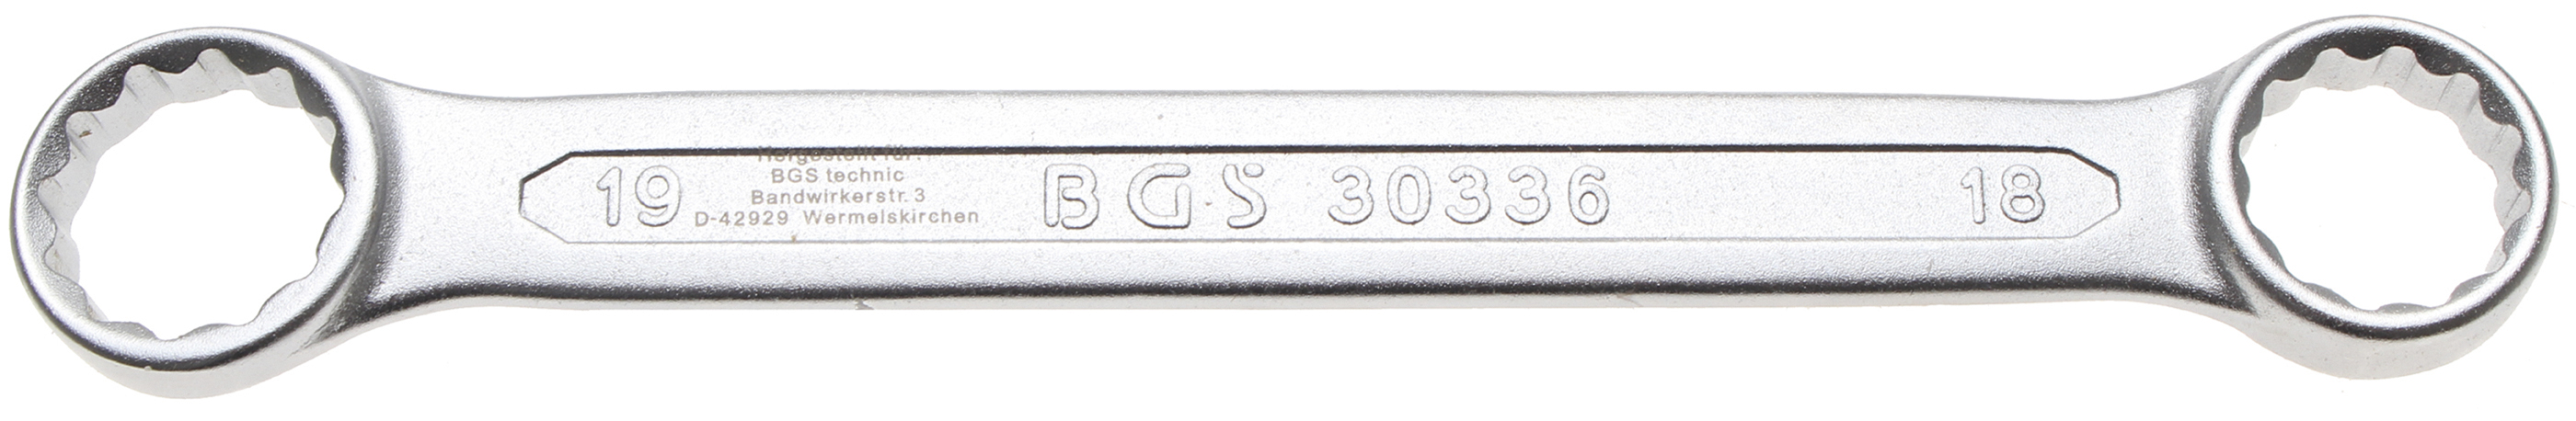 BGS 30336 Cheie inelara 18x19 mm